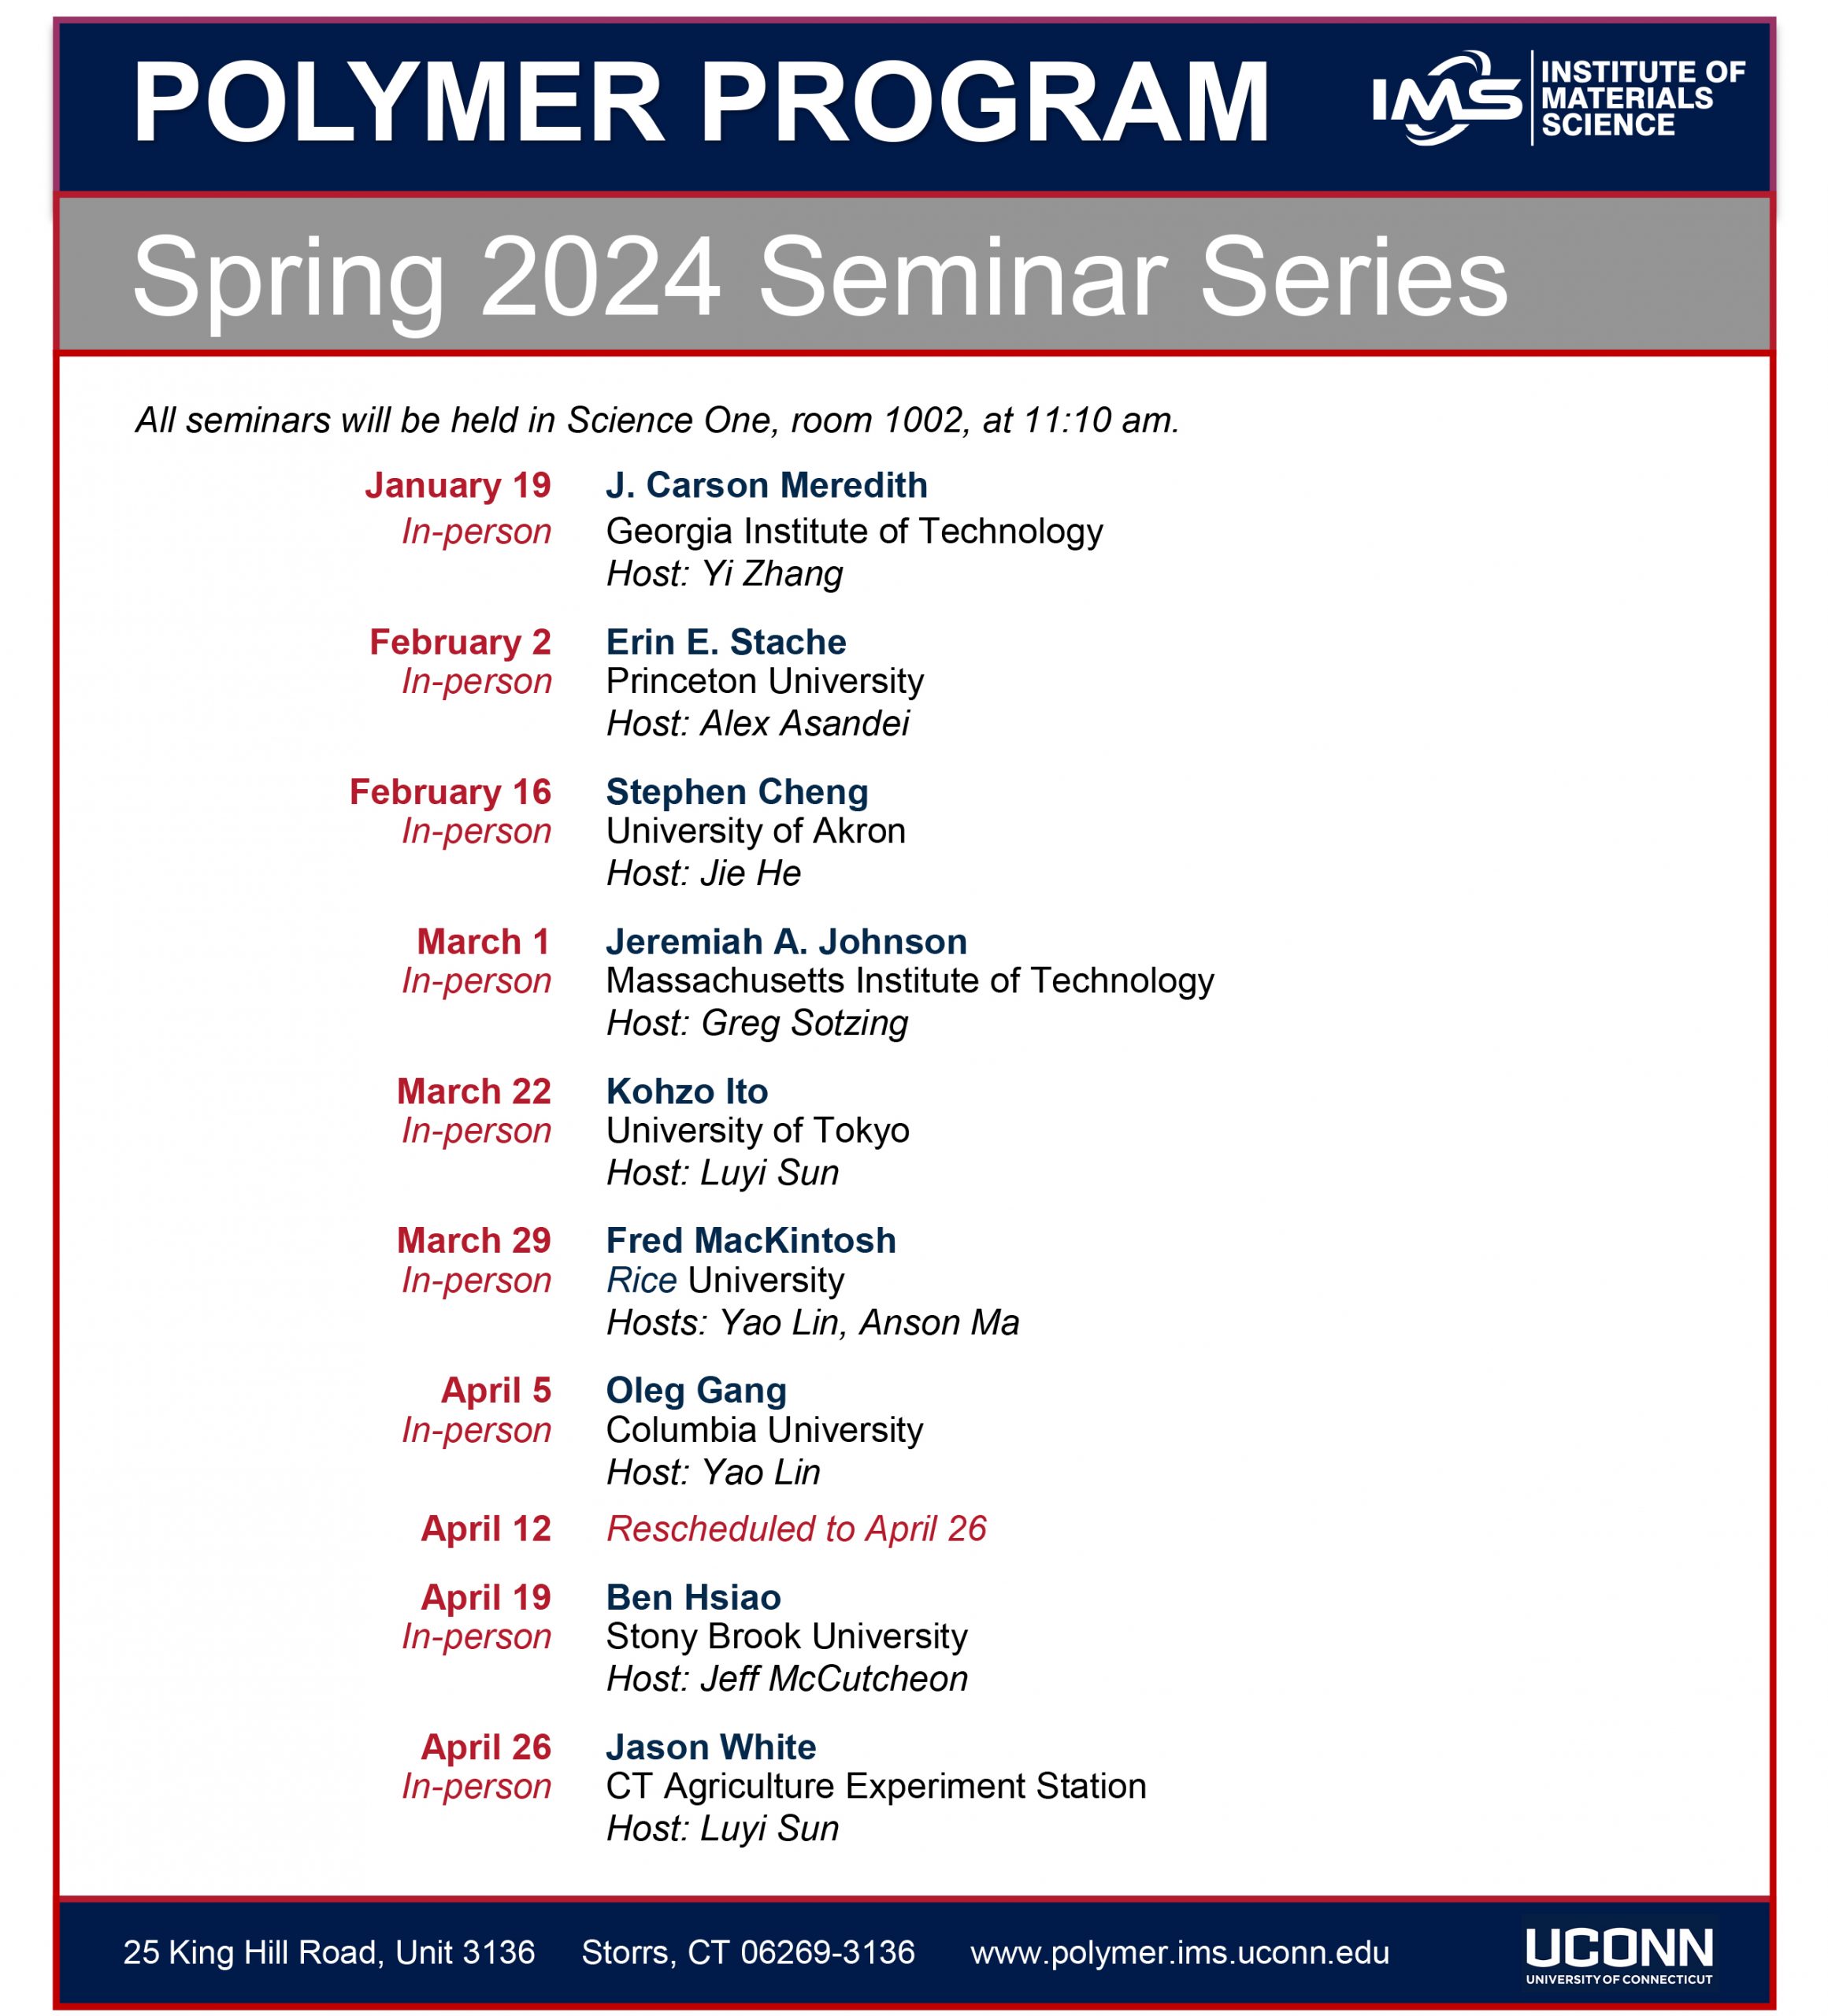 IMS Polymer Program Fall 2023 Seminar Series